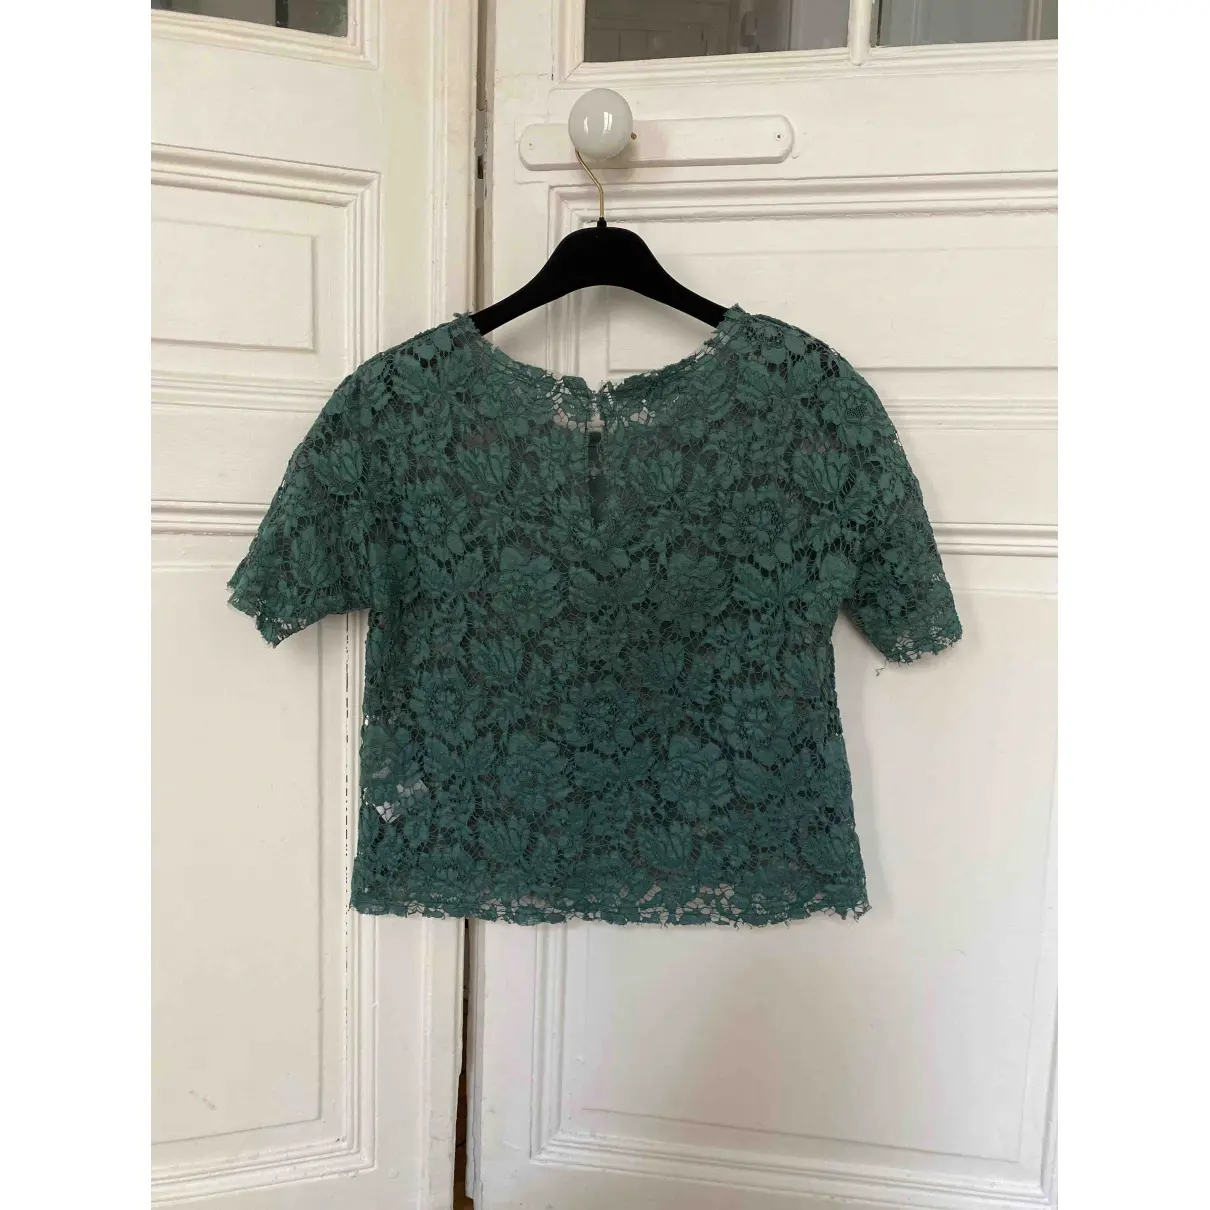 Buy Valentino Garavani Lace blouse online